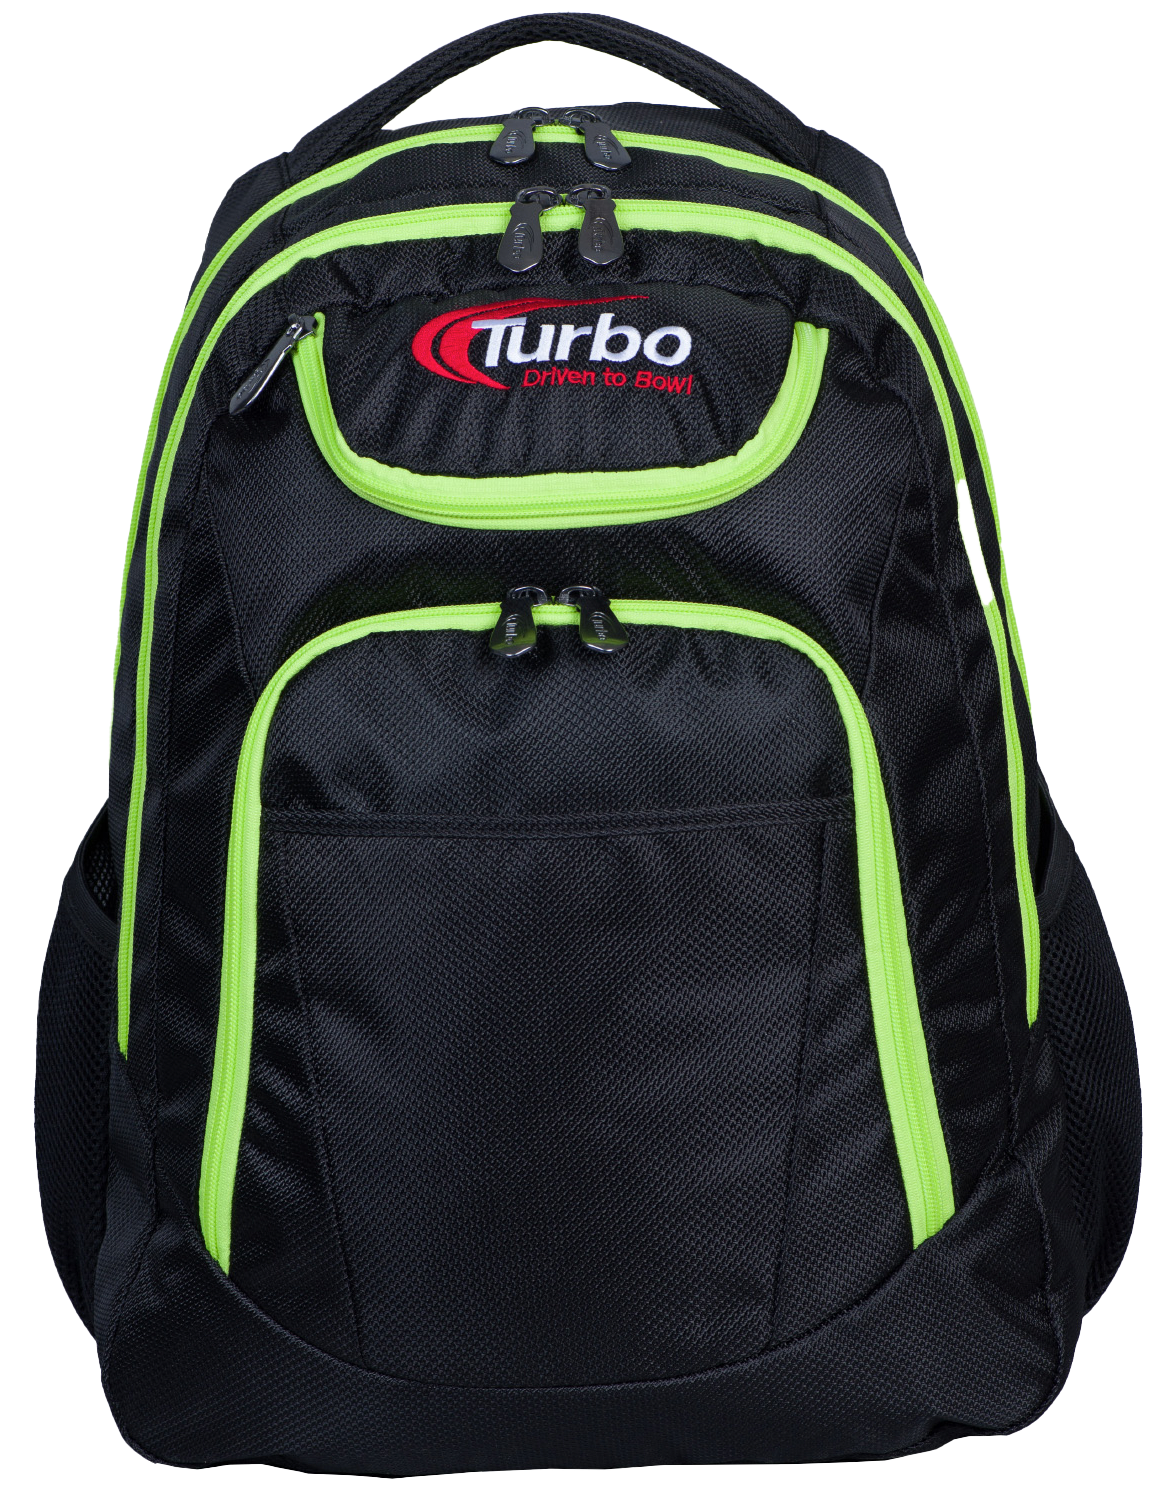 Turbo Shuttle Bowling Backpack Black/LIme